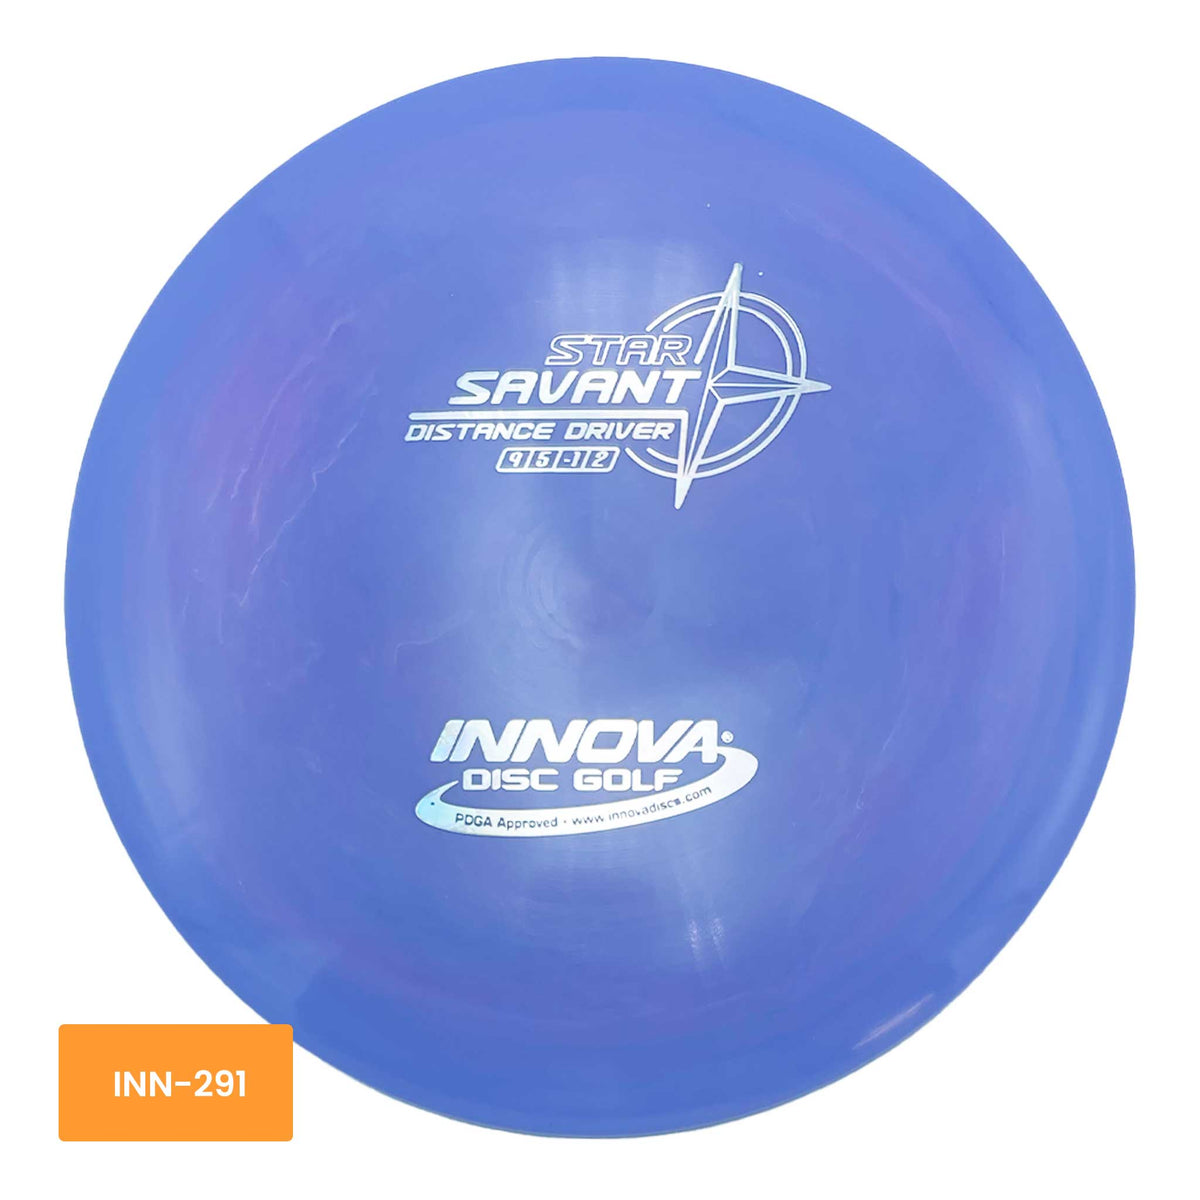 Innova Disc Golf Star Savant distance driver - Purple